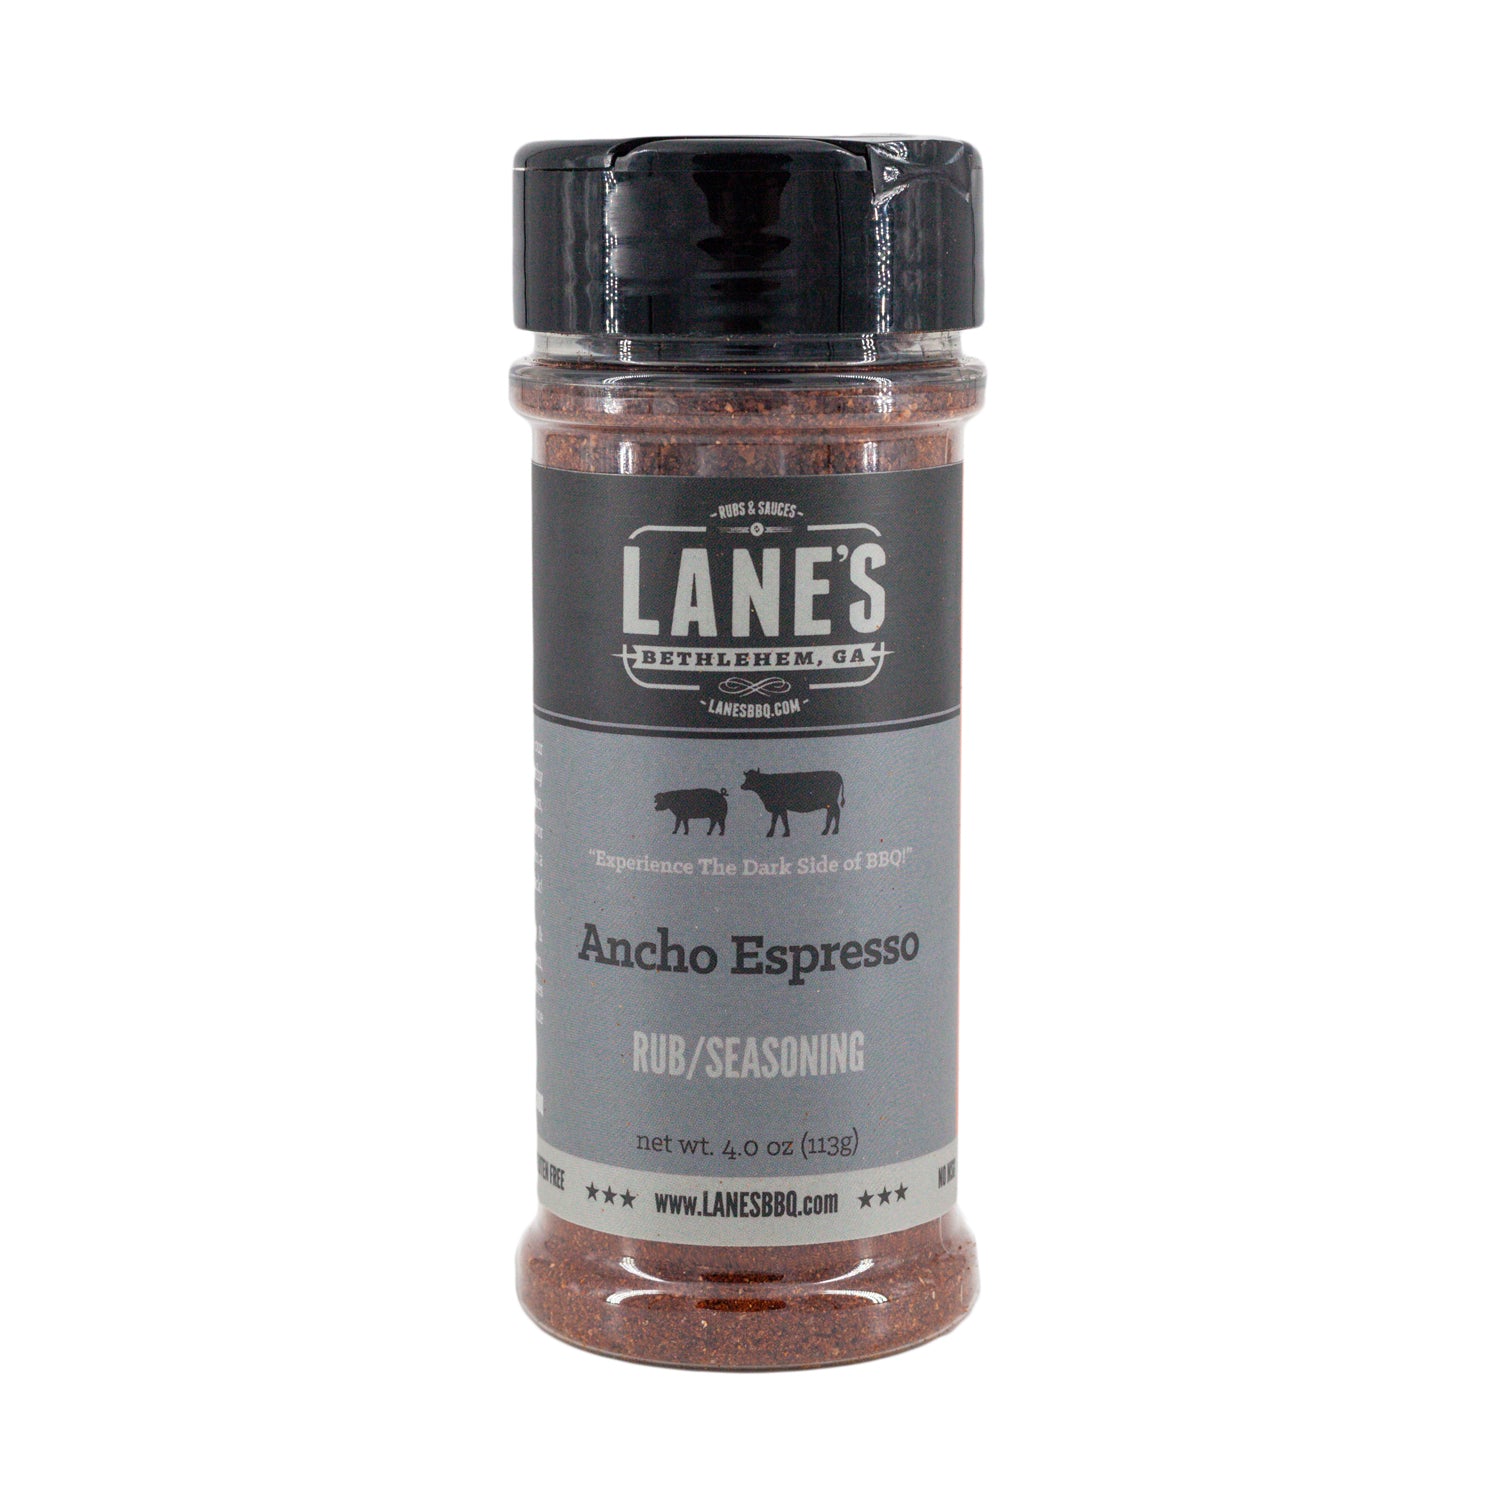  Lane's BBQ Salt and Pepper 50/50, Coarse Salt and 16 Mesh  Black Pepper, Bulk Spices, Gluten-Free